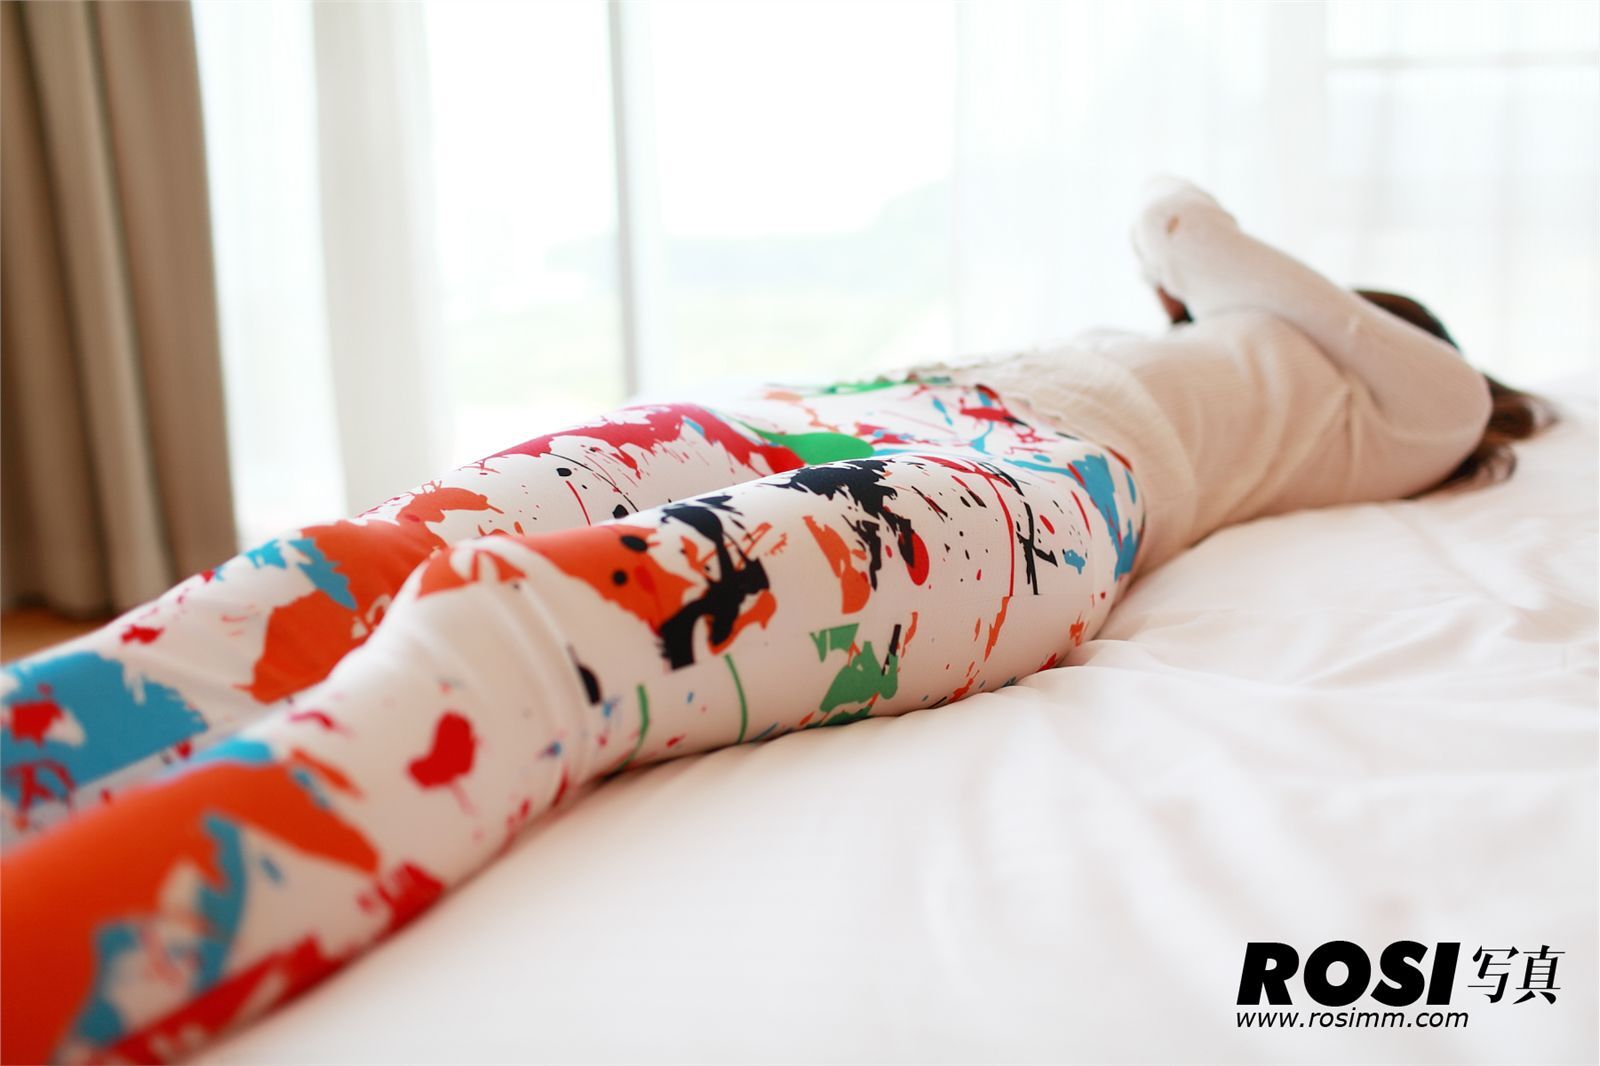 Rosimm-no.301 super allure domestic mm beautiful girl silk stockings photo